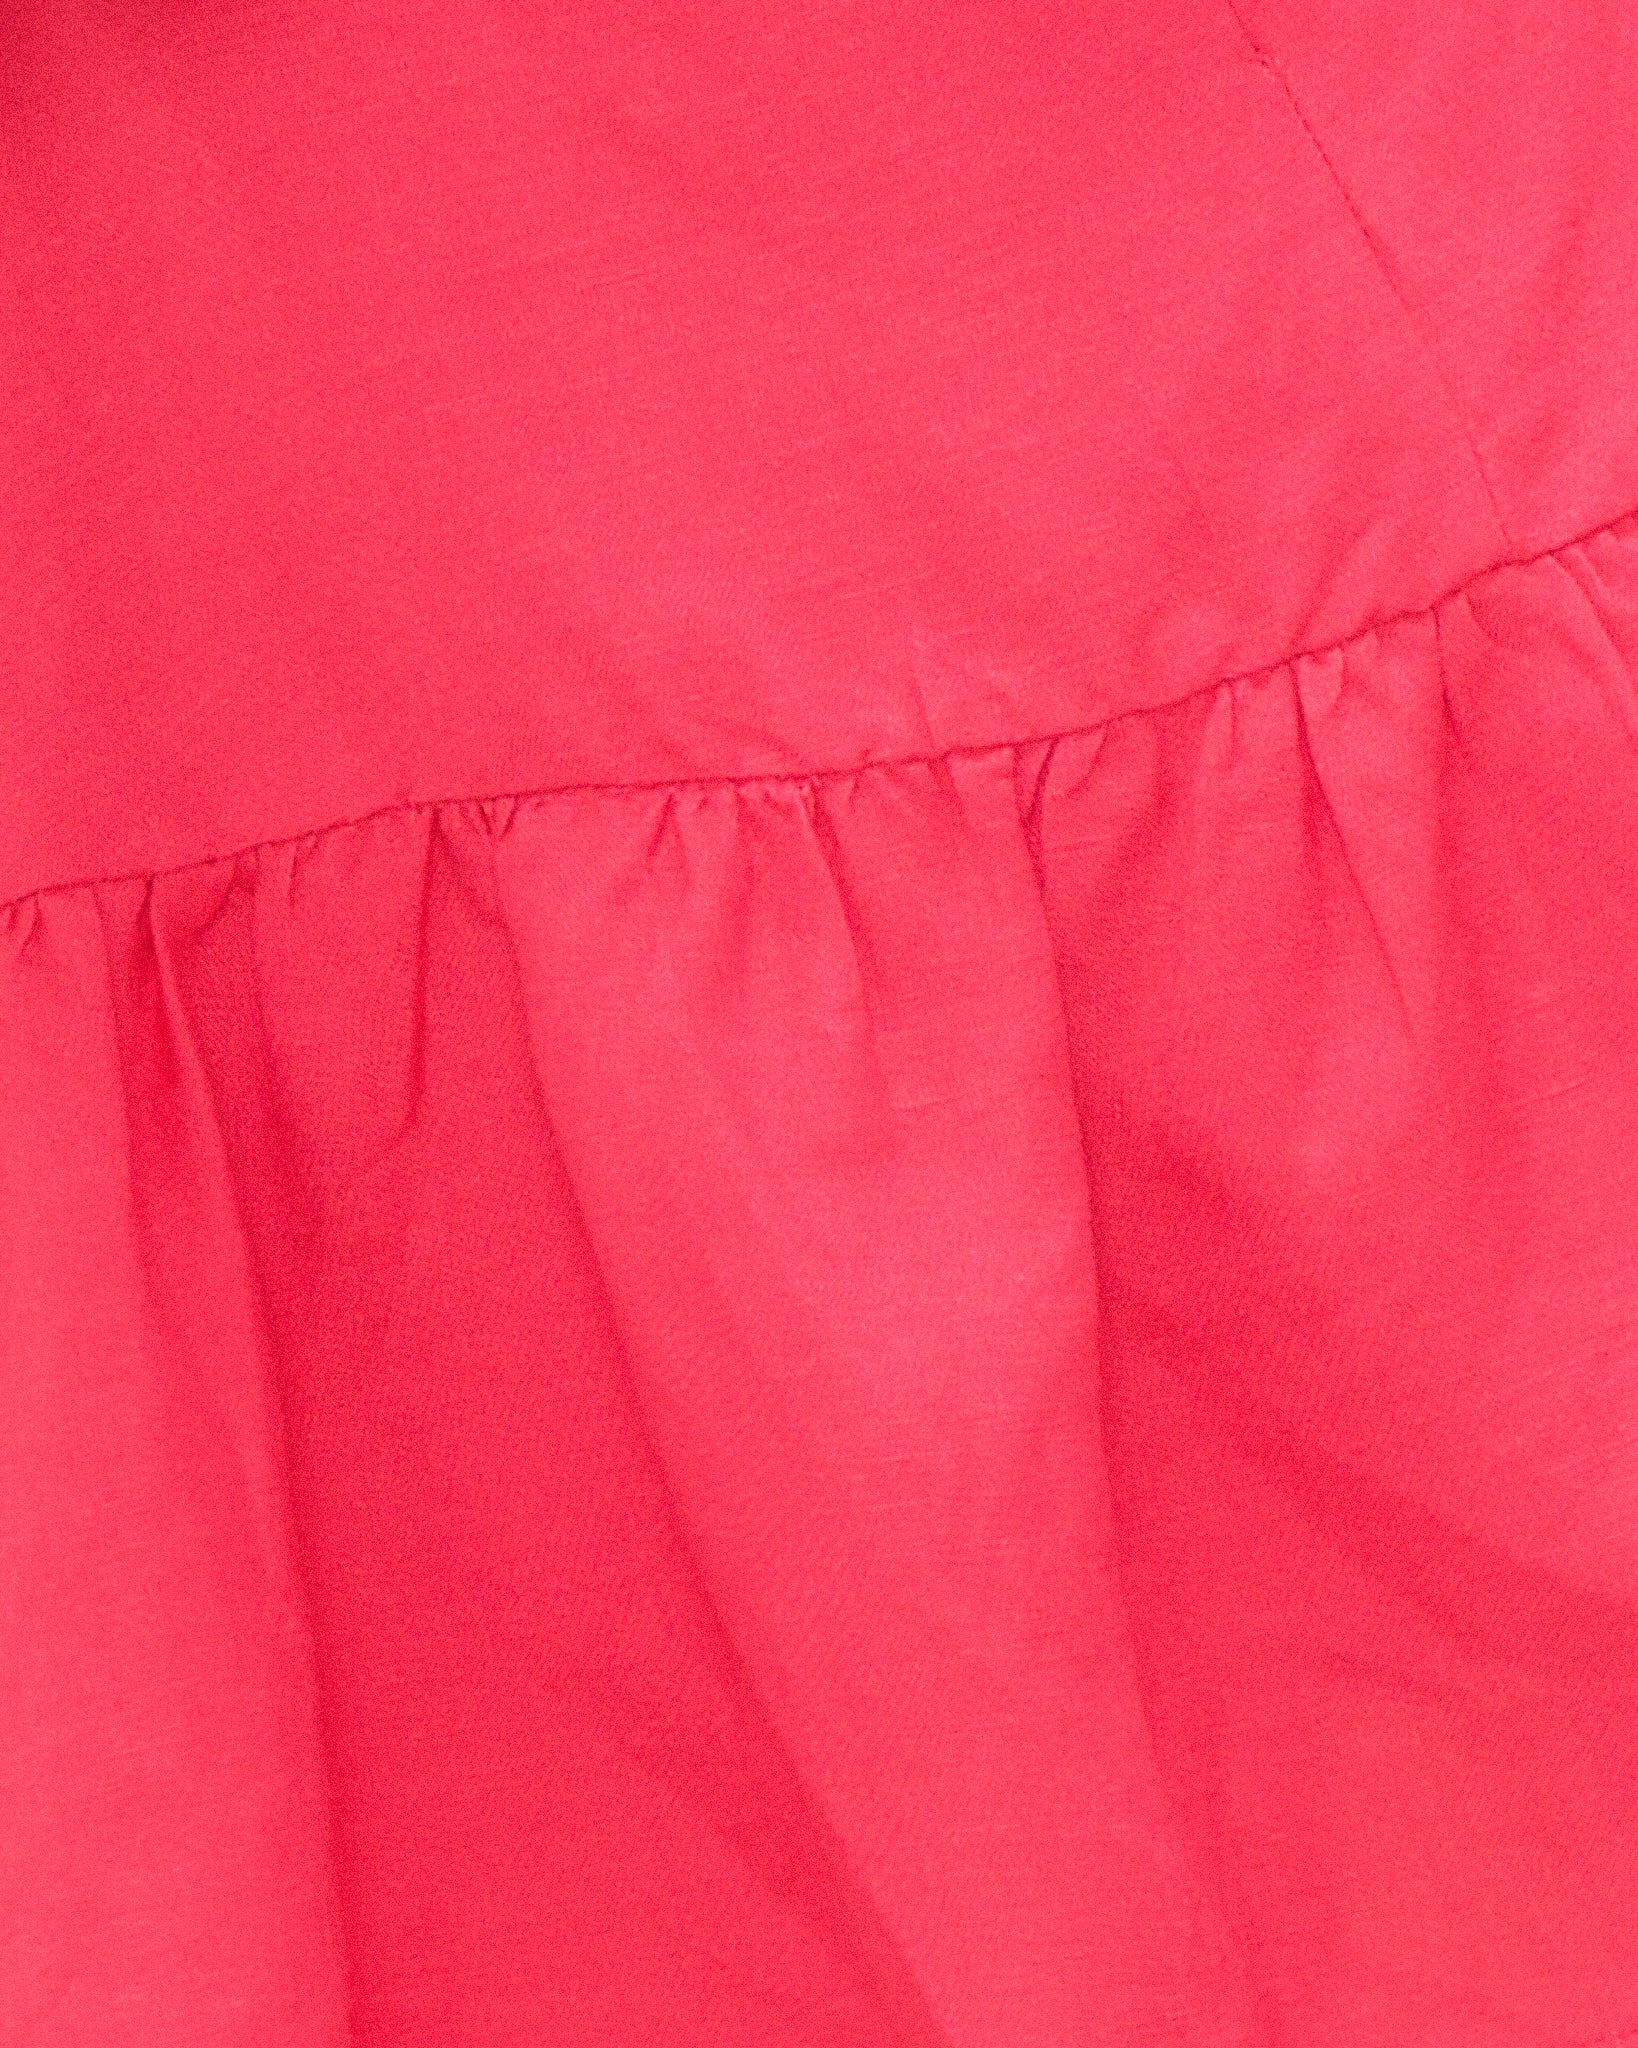 Kaia Pink Linen Open Back Mini Dress